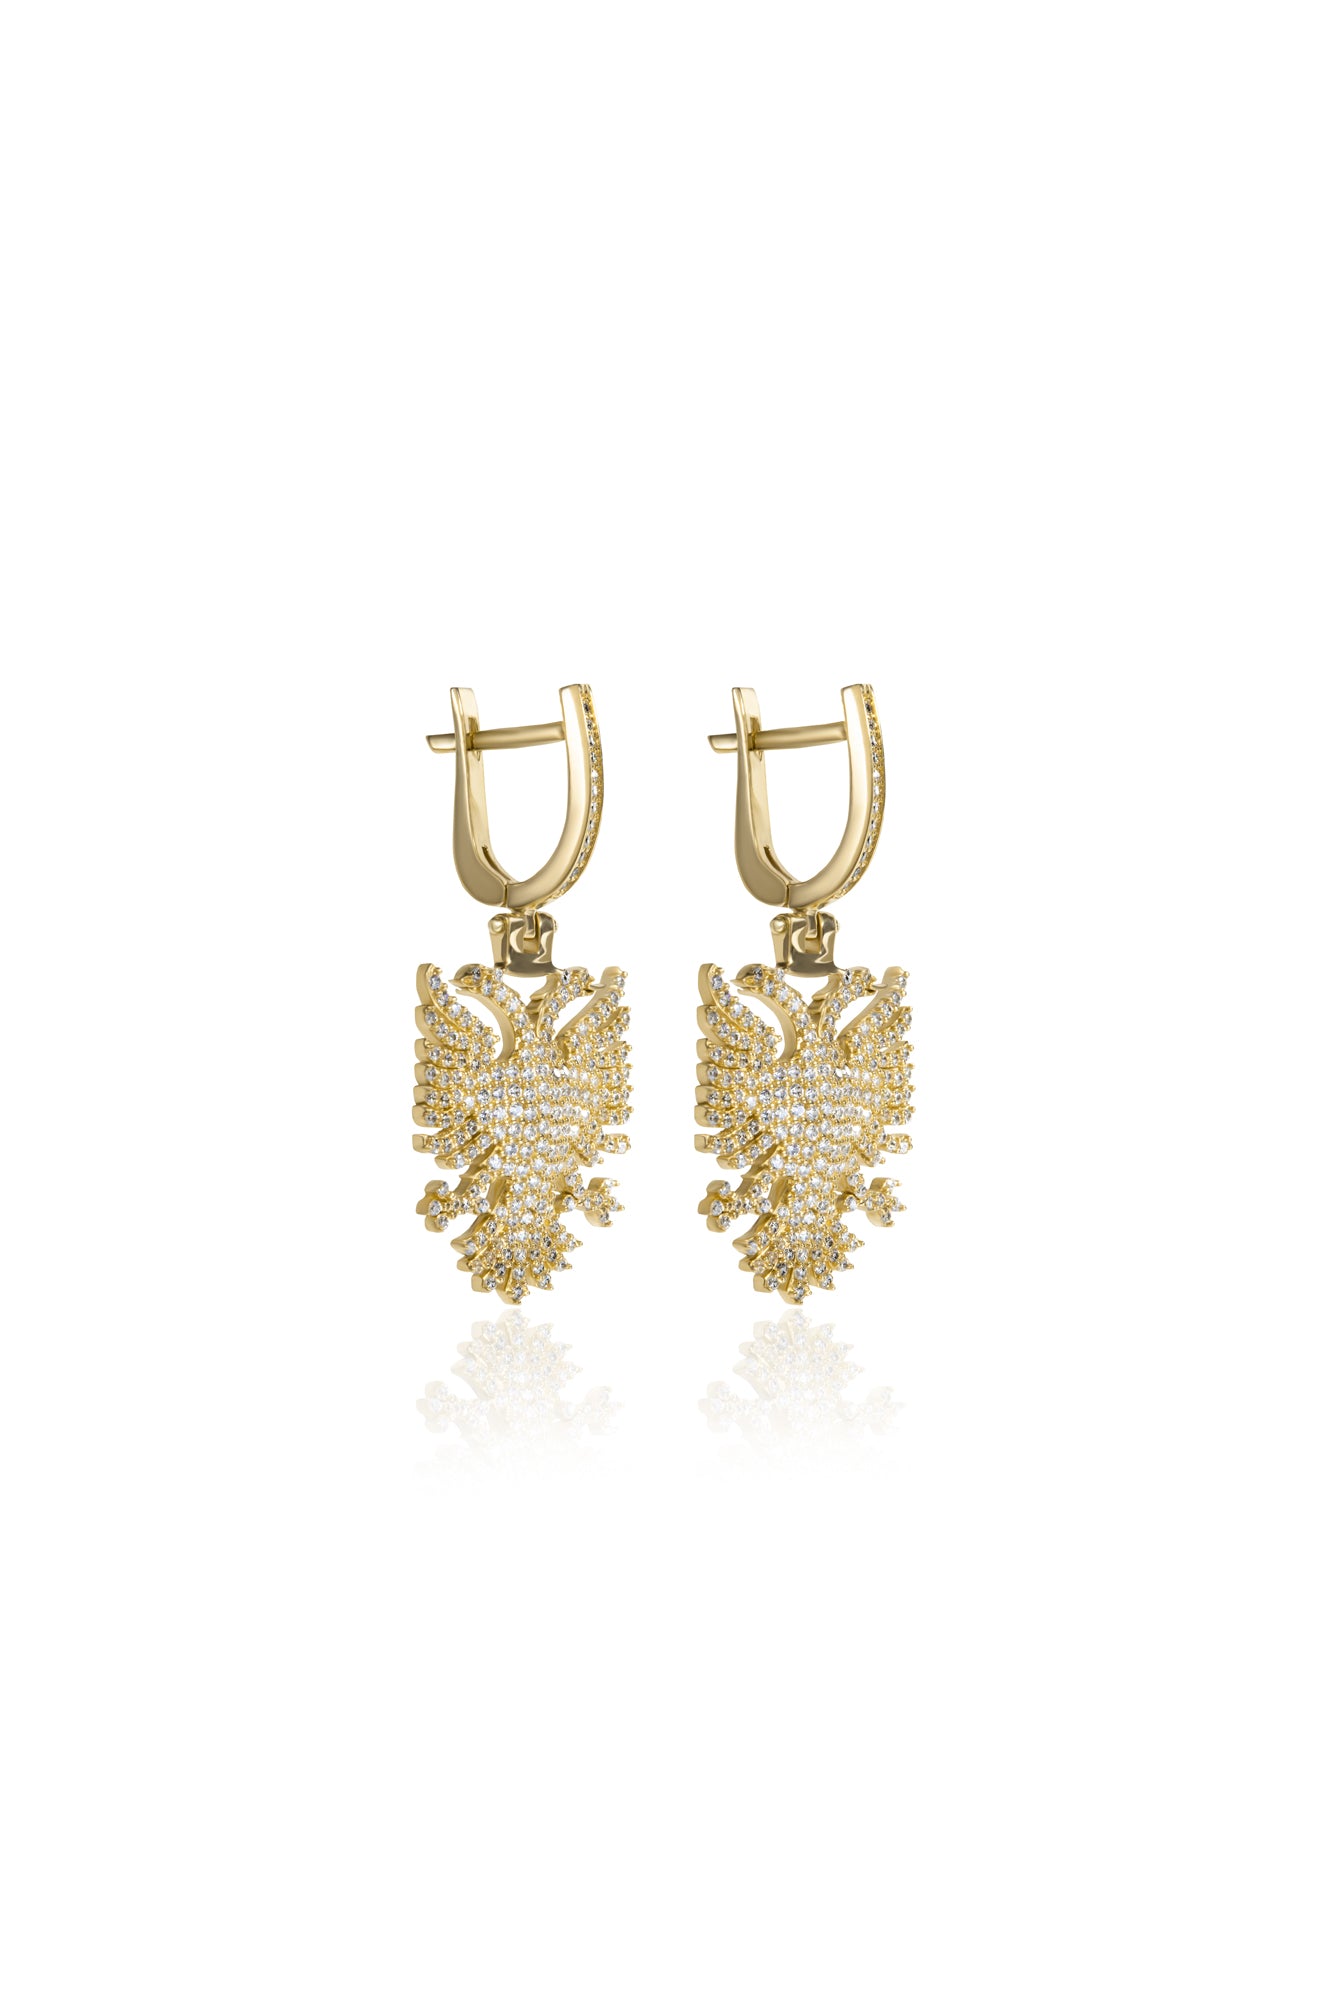 5th Republic Earrings - Serma International